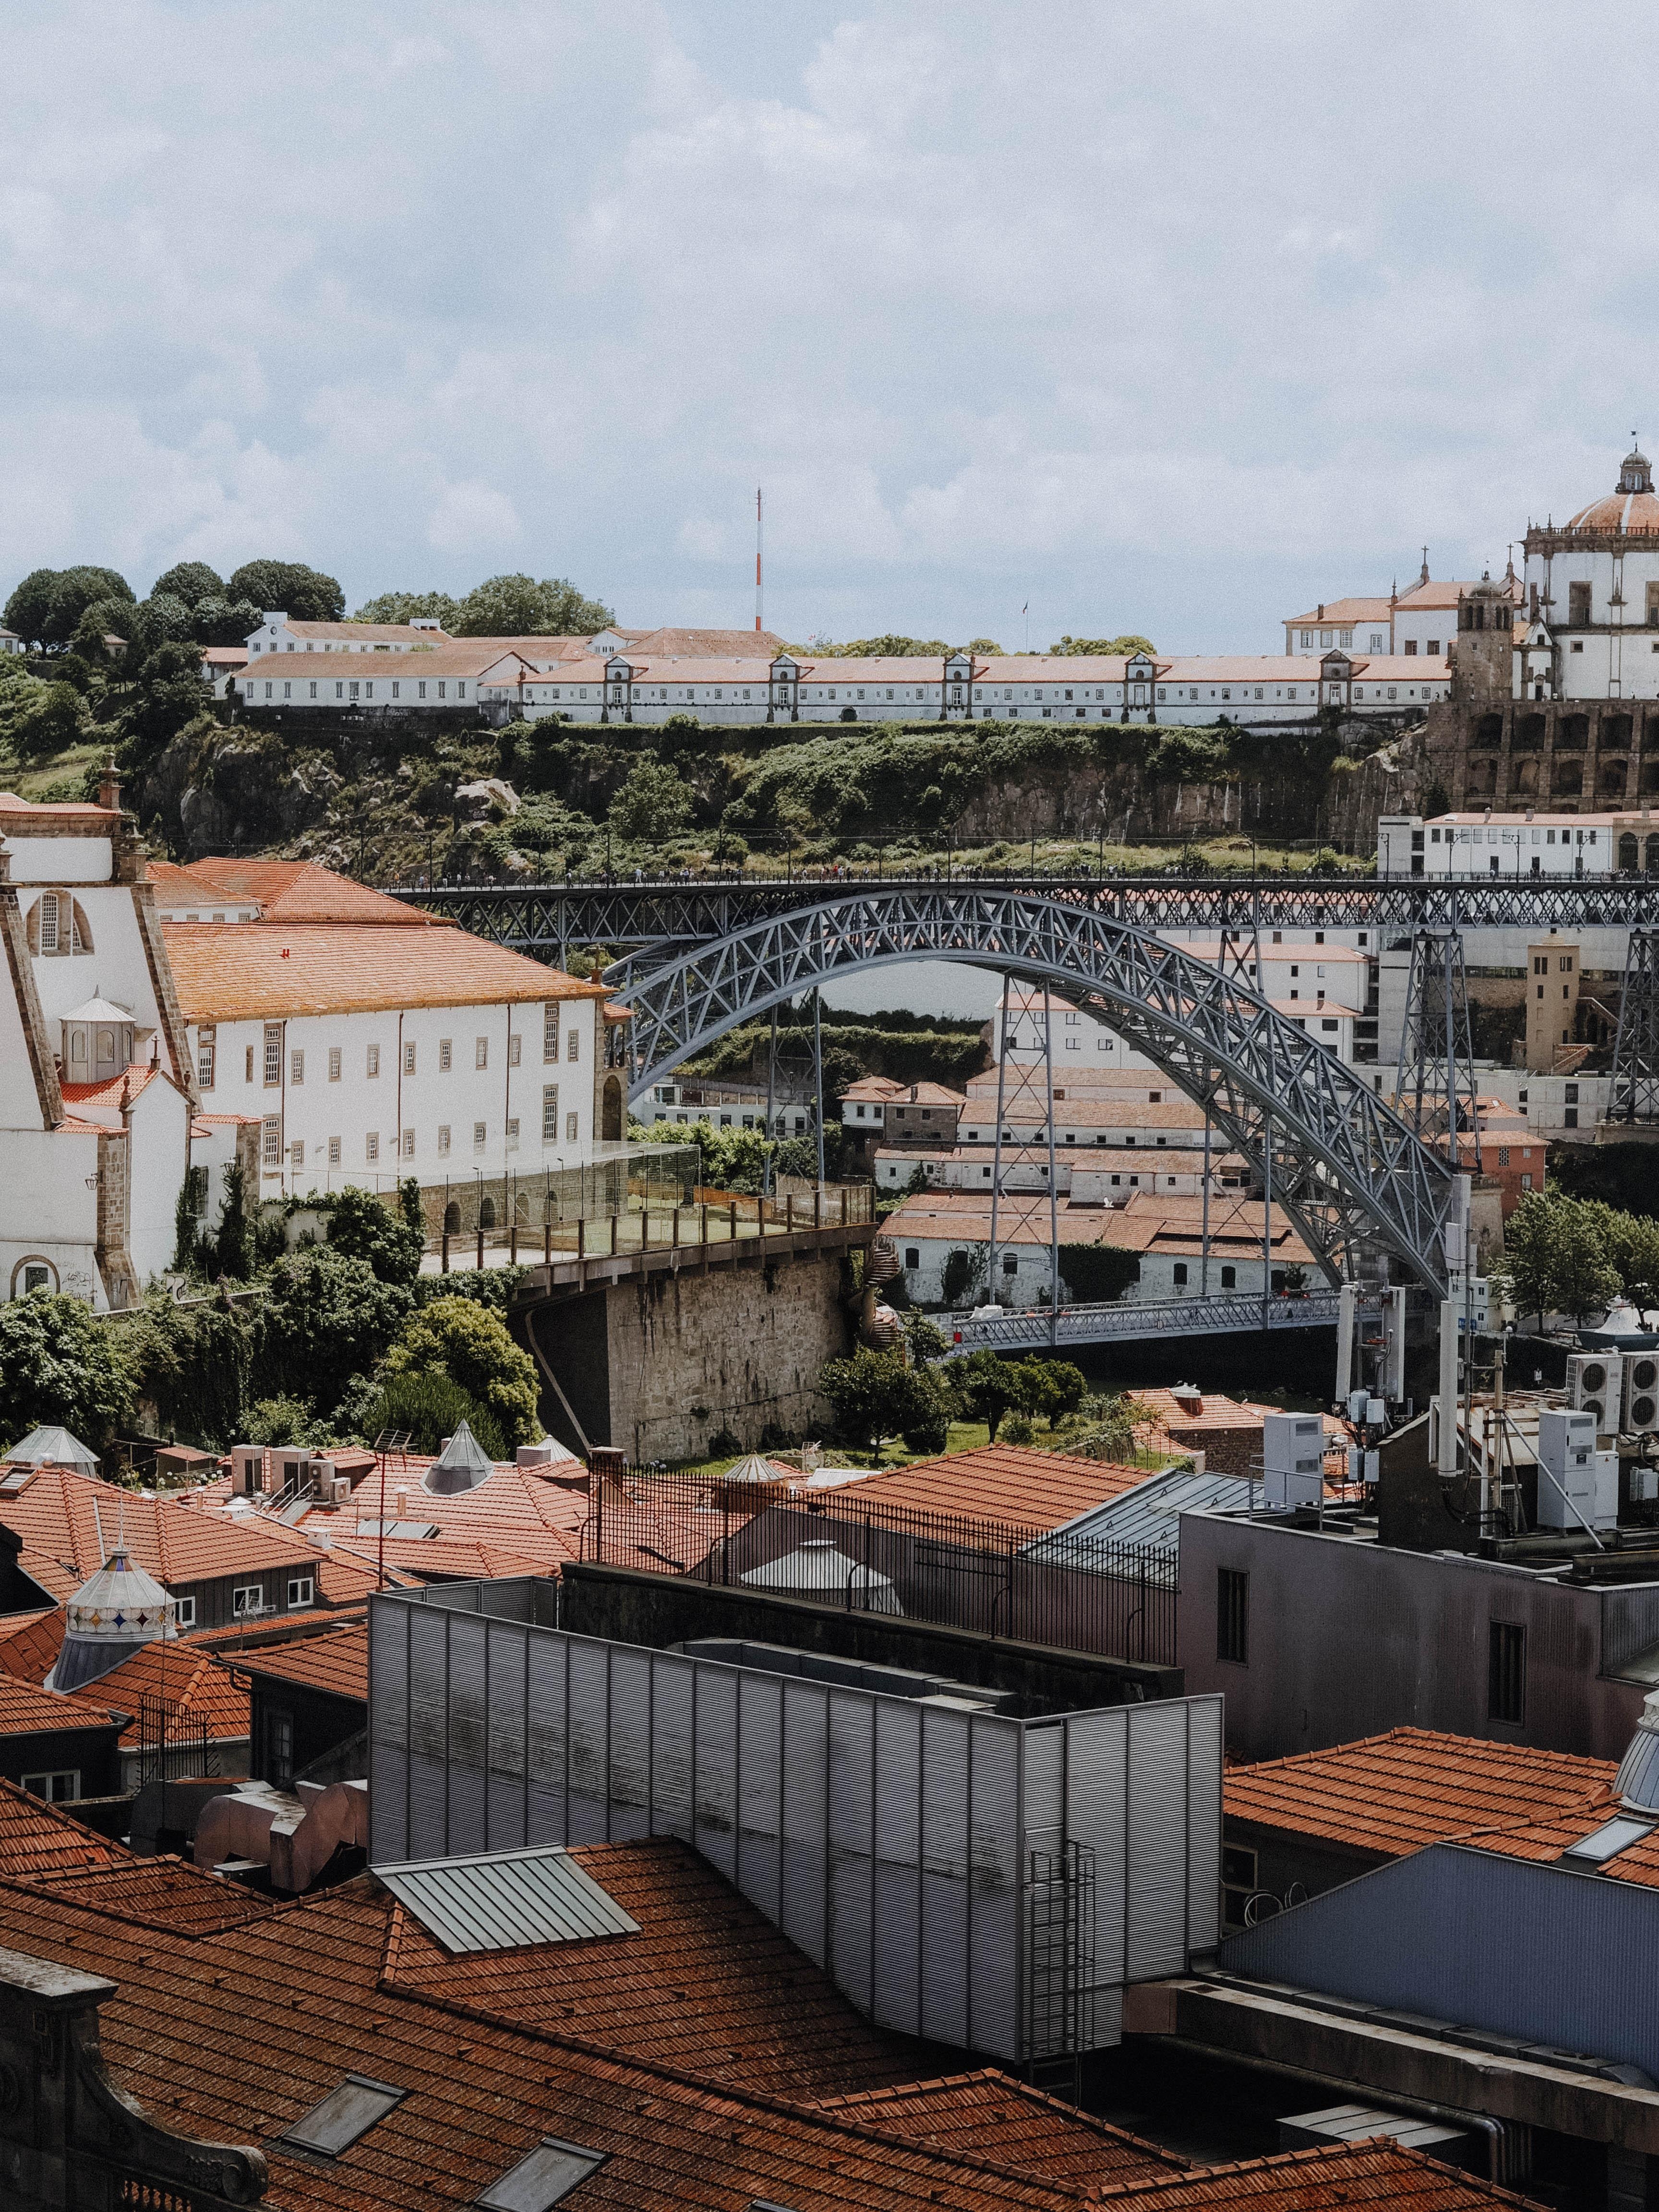 Postkarte aus Porto 💌
#porto #portugal #urlaub #städtetrip